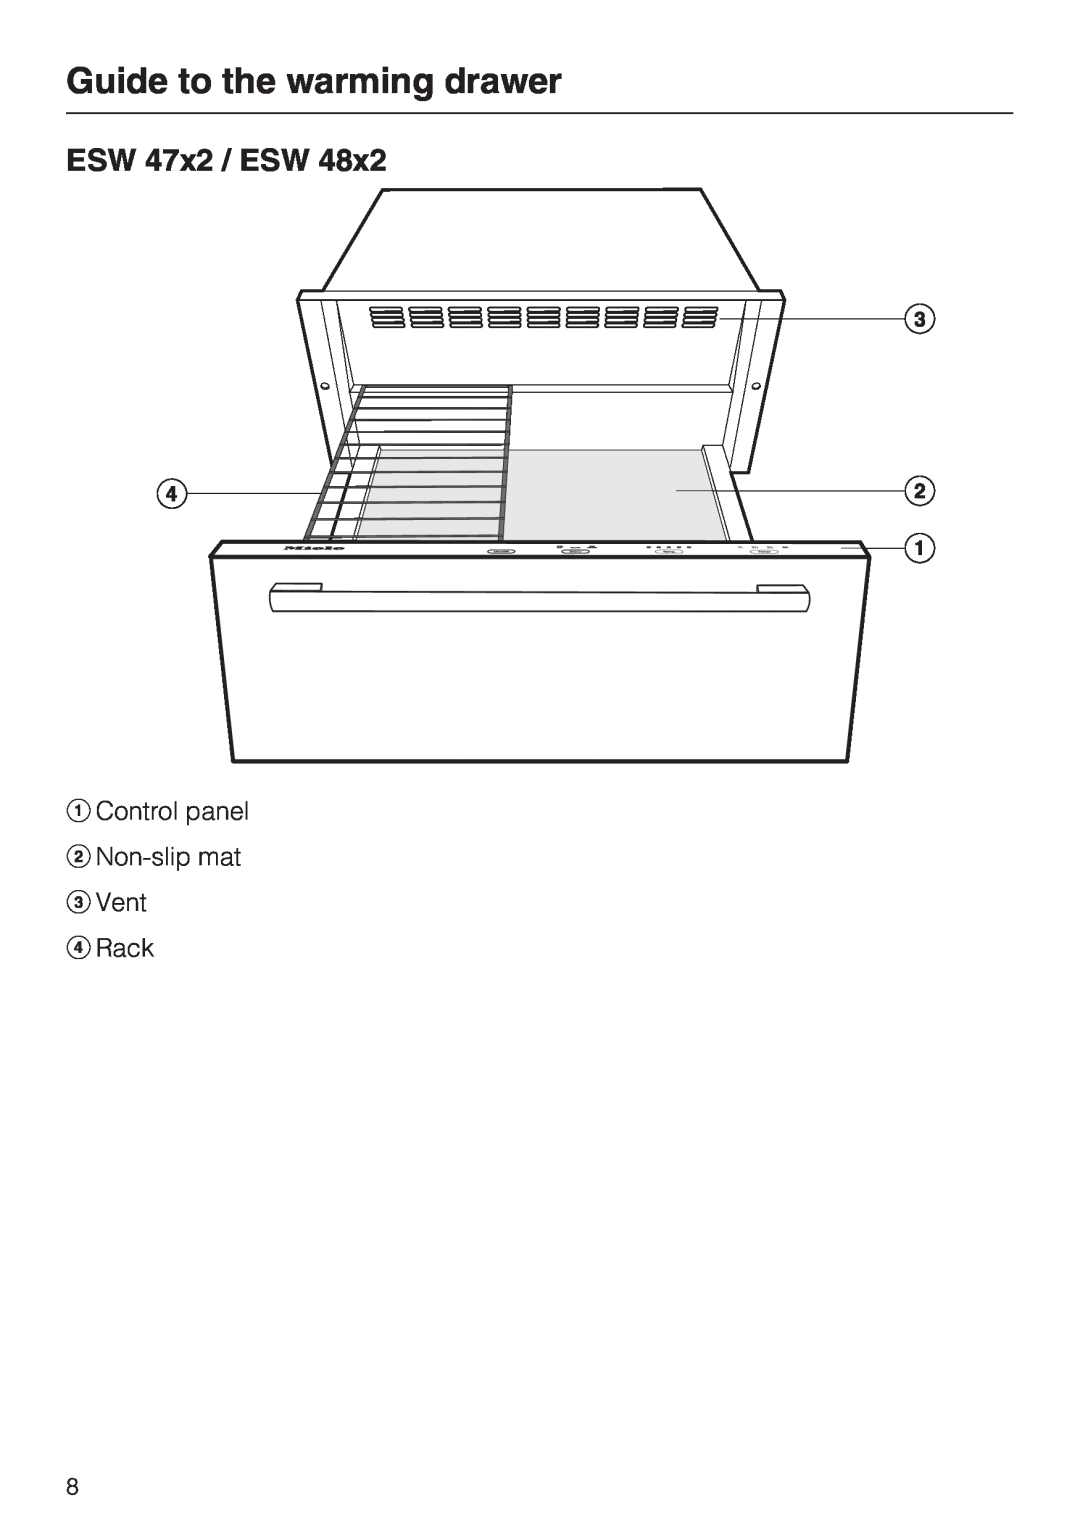 Miele ESW 48X2, ESW4082-14, ESW 47X2 ESW 47x2 / ESW, Guide to the warming drawer, Control panel Non-slipmat Vent Rack 